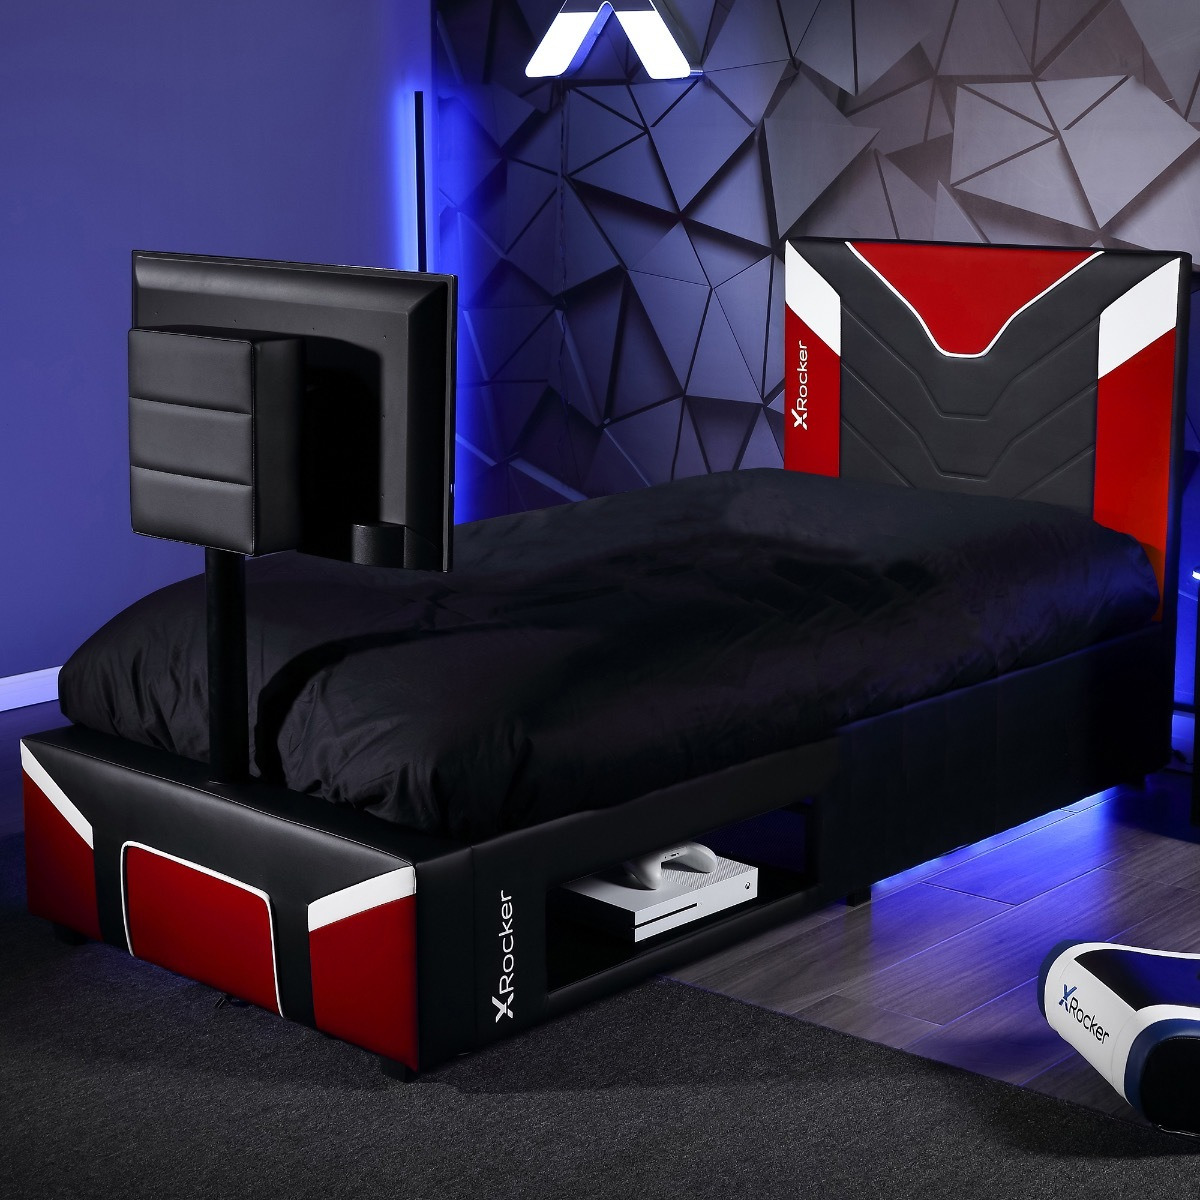 X Rocker Cerberus Twist TV Gaming Bed Single Red - image 1